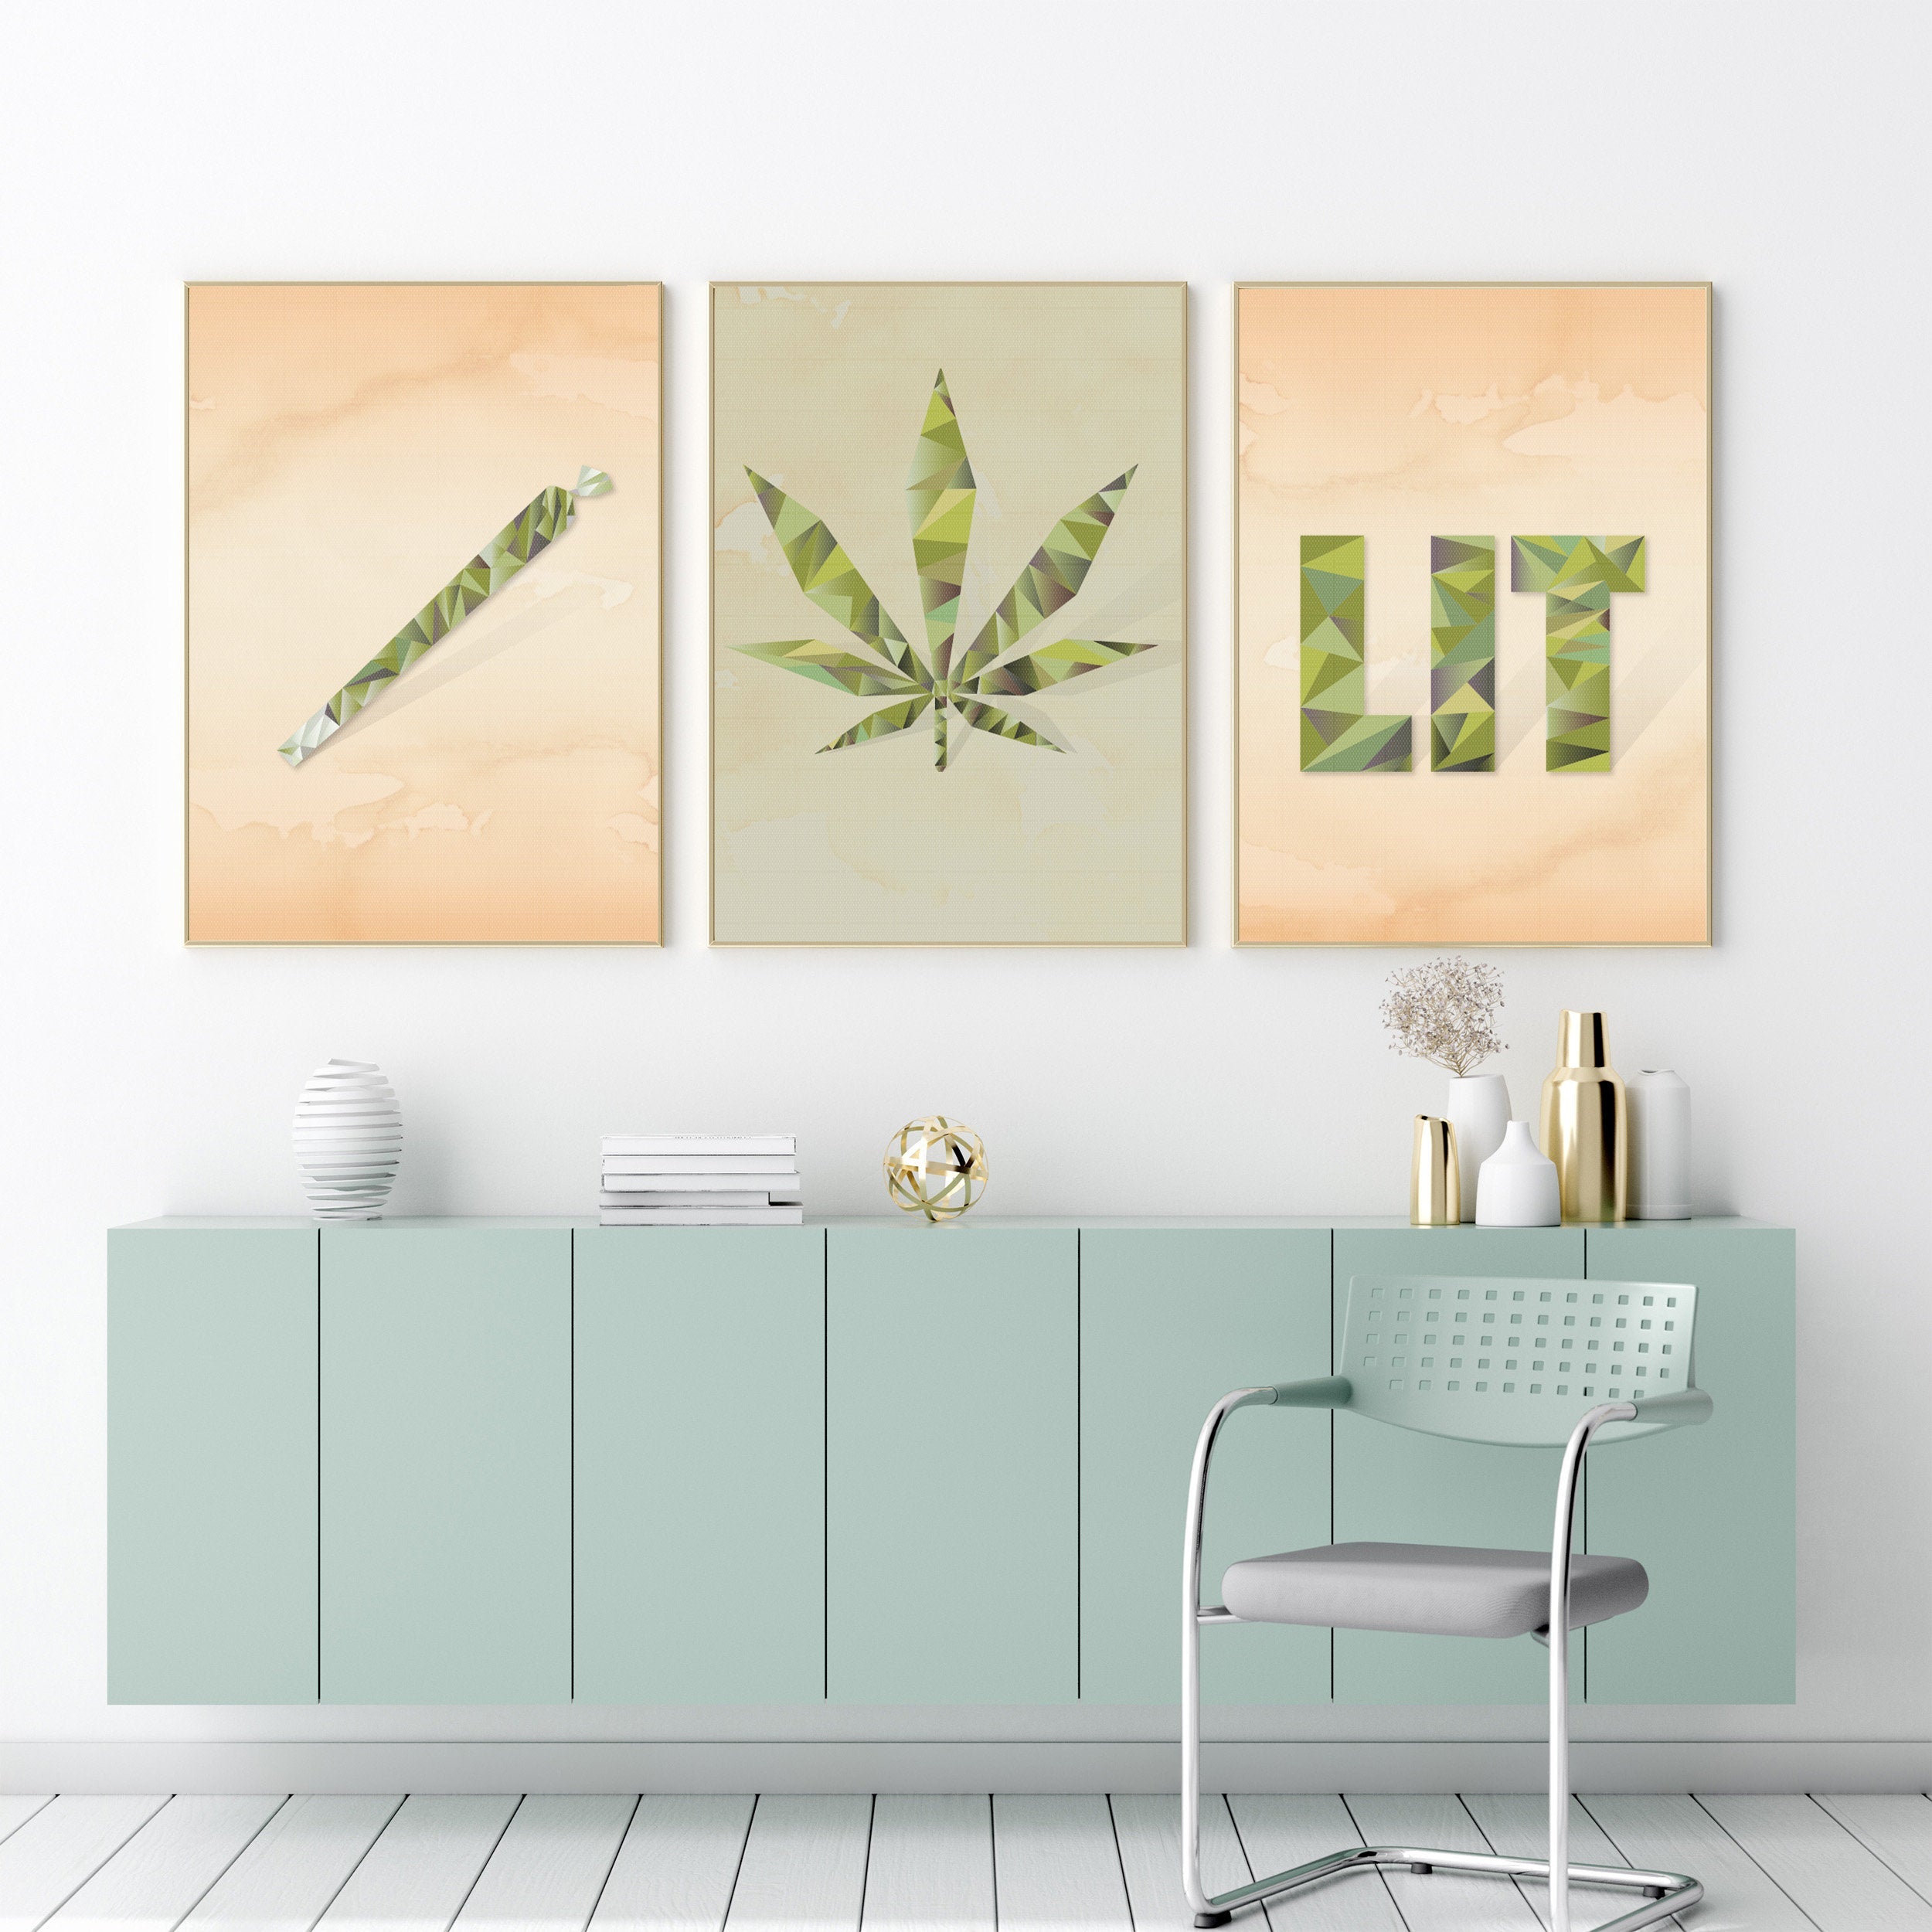 Giclee Art Print - 3 Piece "Lit" Giclee Print Set, Marijuana Home Decor, Stoner Gifts